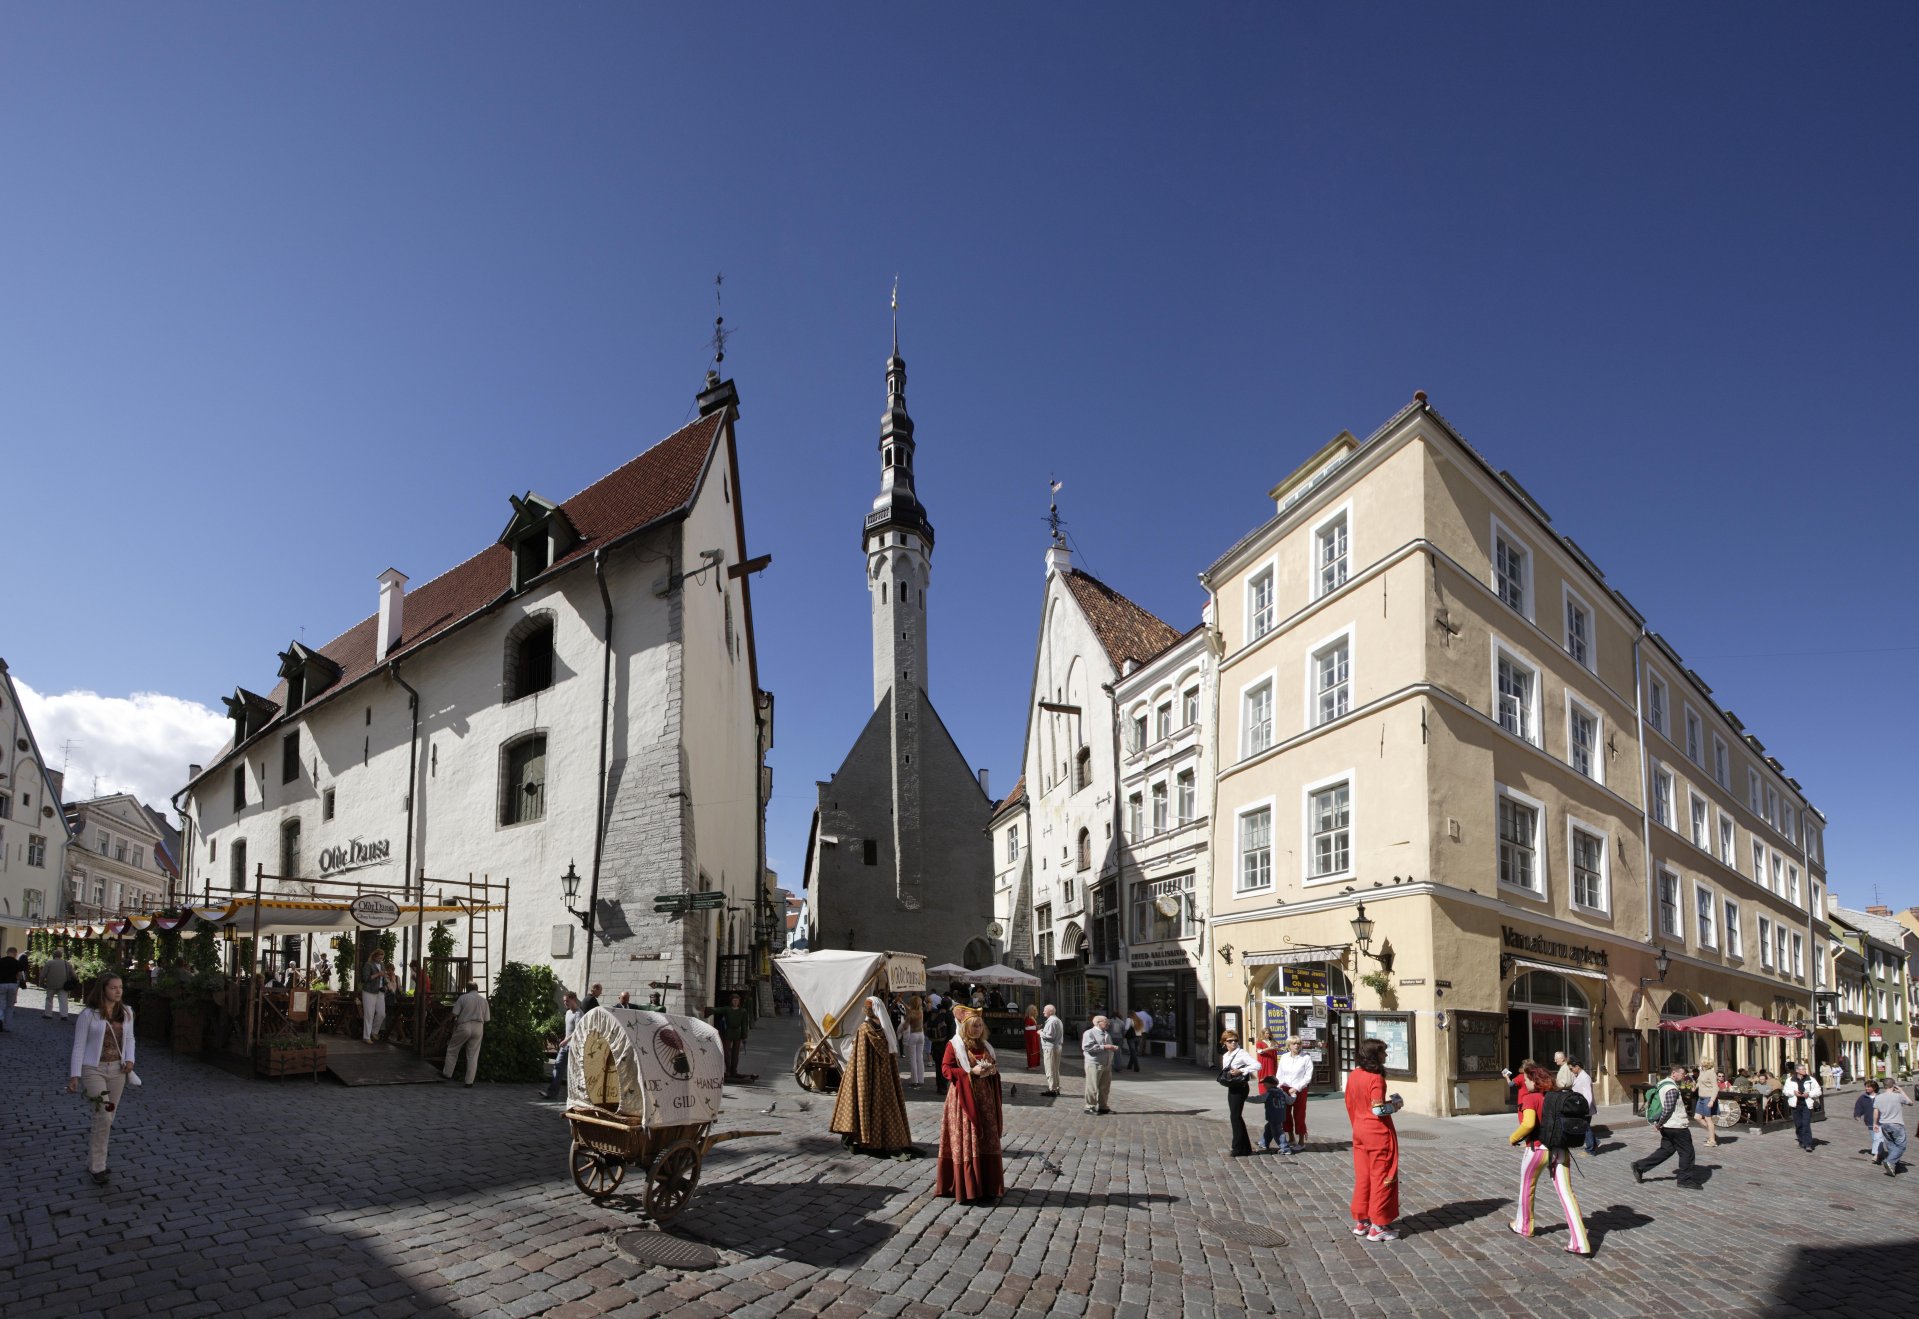 Tallinn%20Streets%20od%20Old%20Town_Toomas%20Tuul.jpg